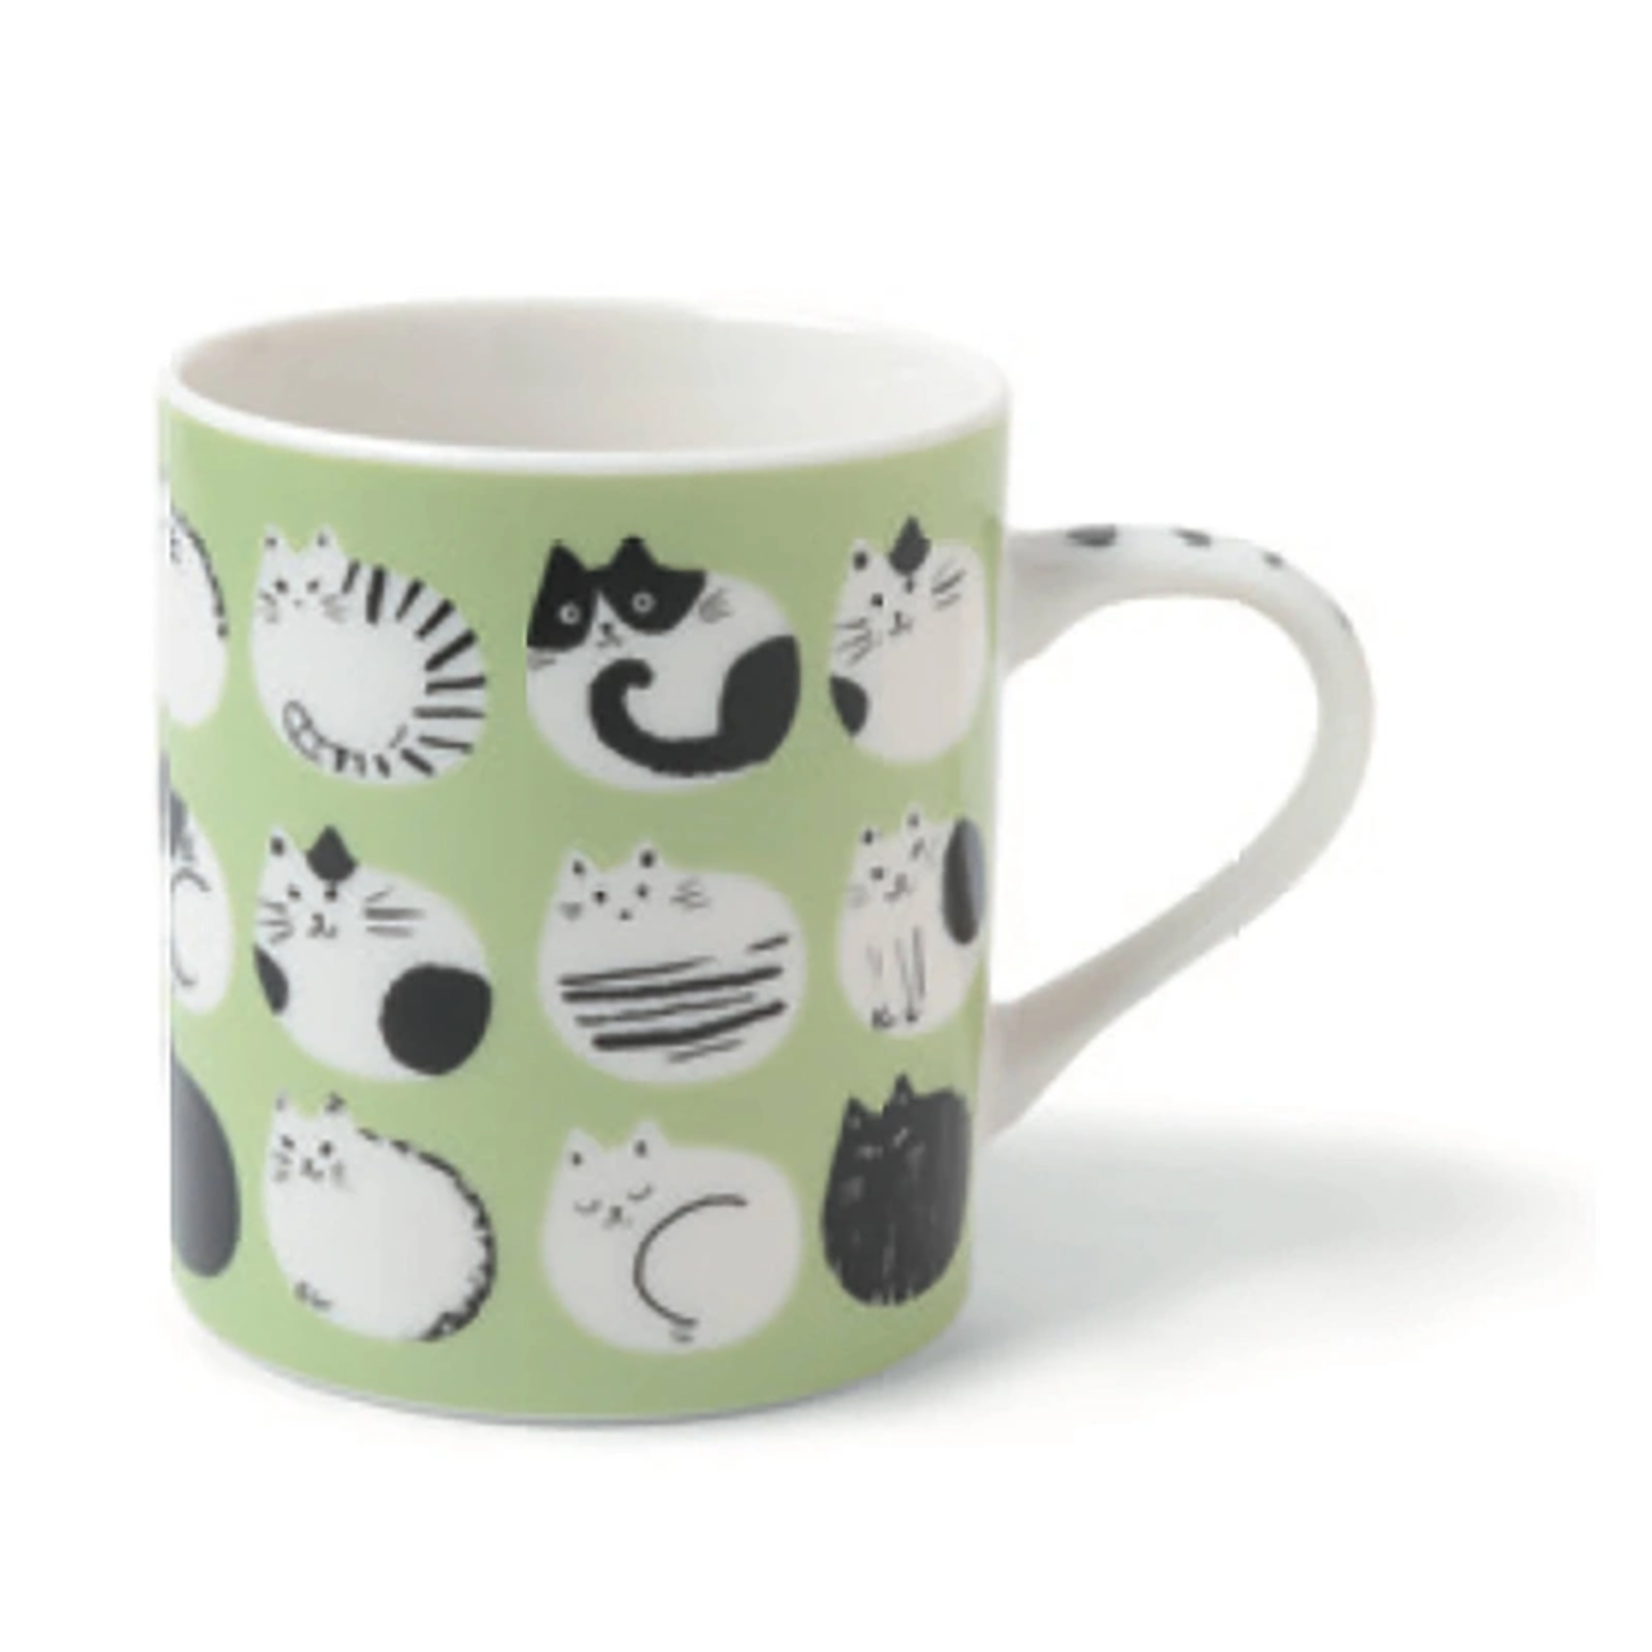 Jewel Japan Mug - Cozy Cats 8 oz. - Green C5180B